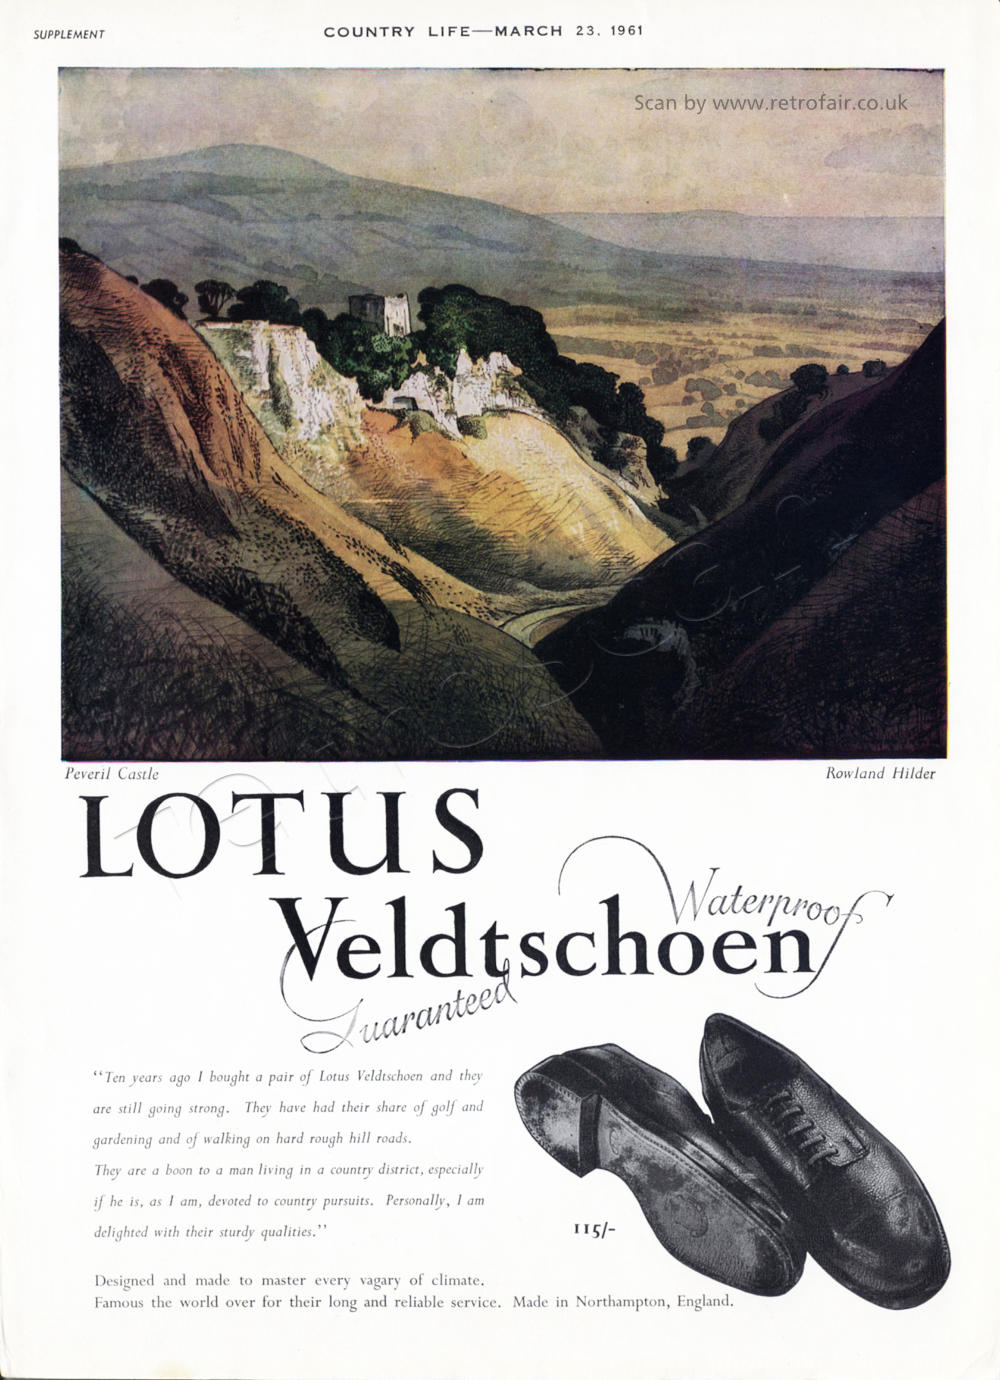 1961 Lotus Veldtschoen Shoes showing Peveril Castle - unfarmed